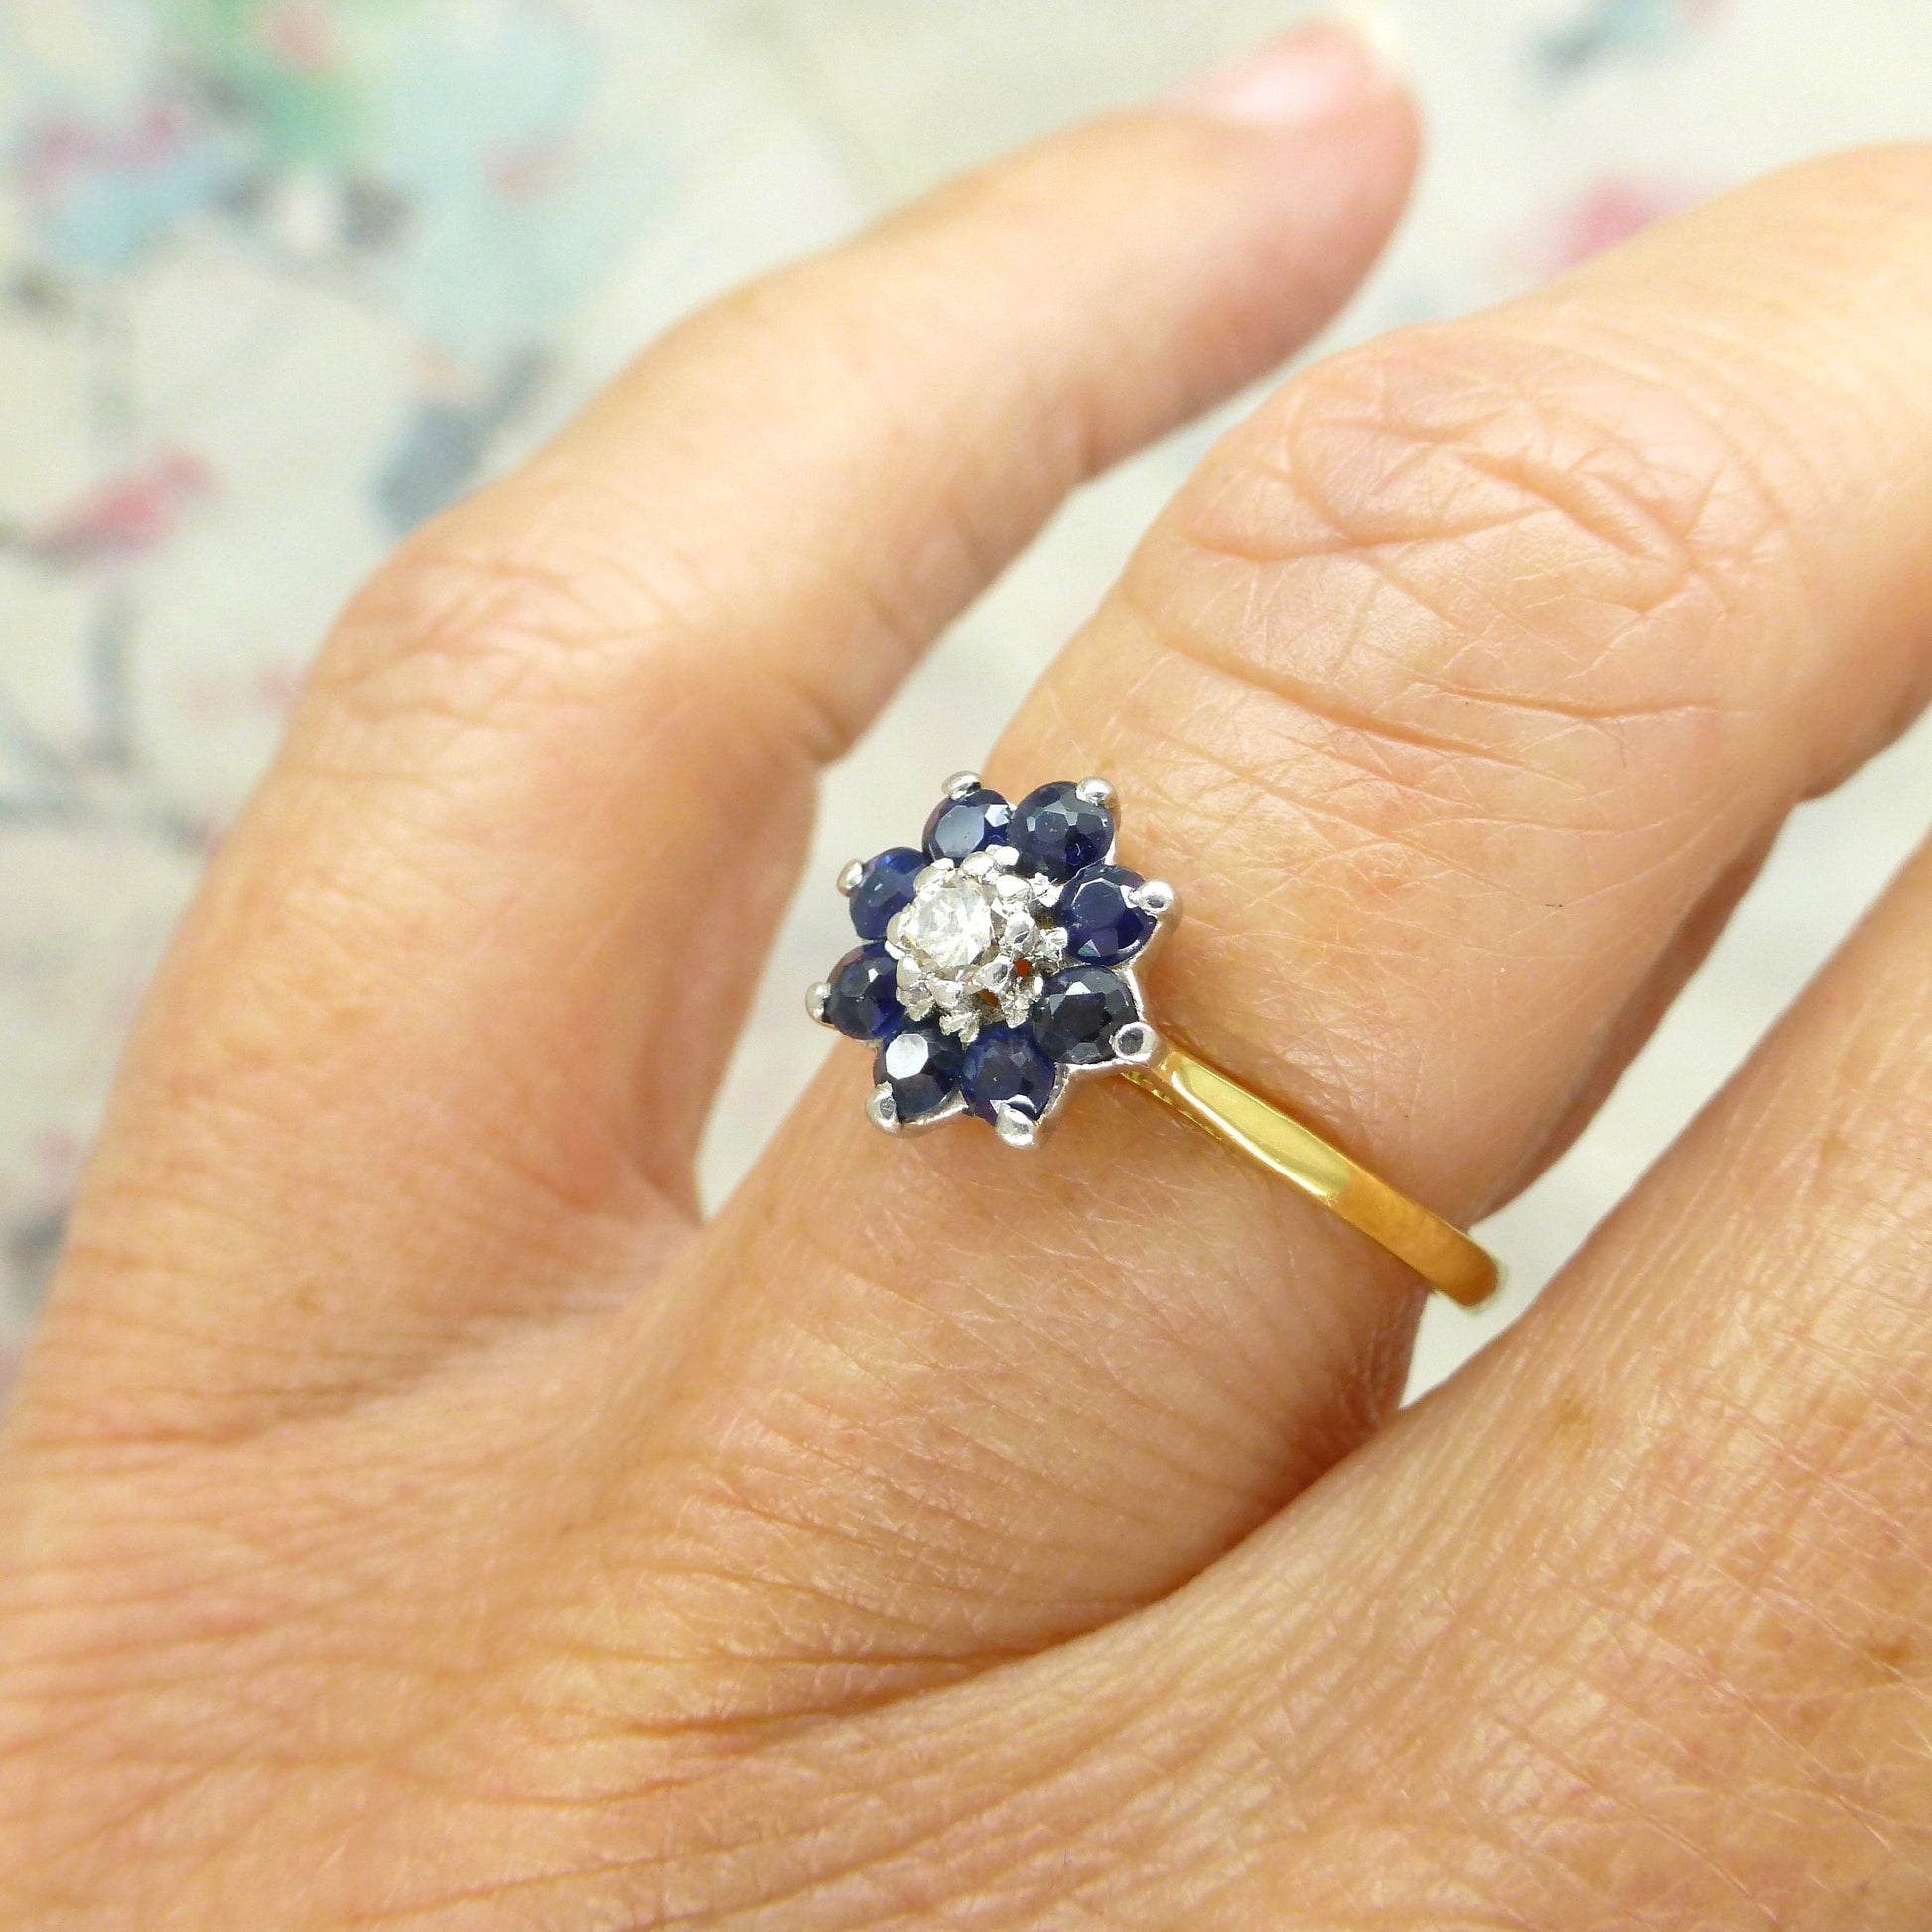 Sweet vintage 18ct diamond & sapphire daisy cluster ring c1970's